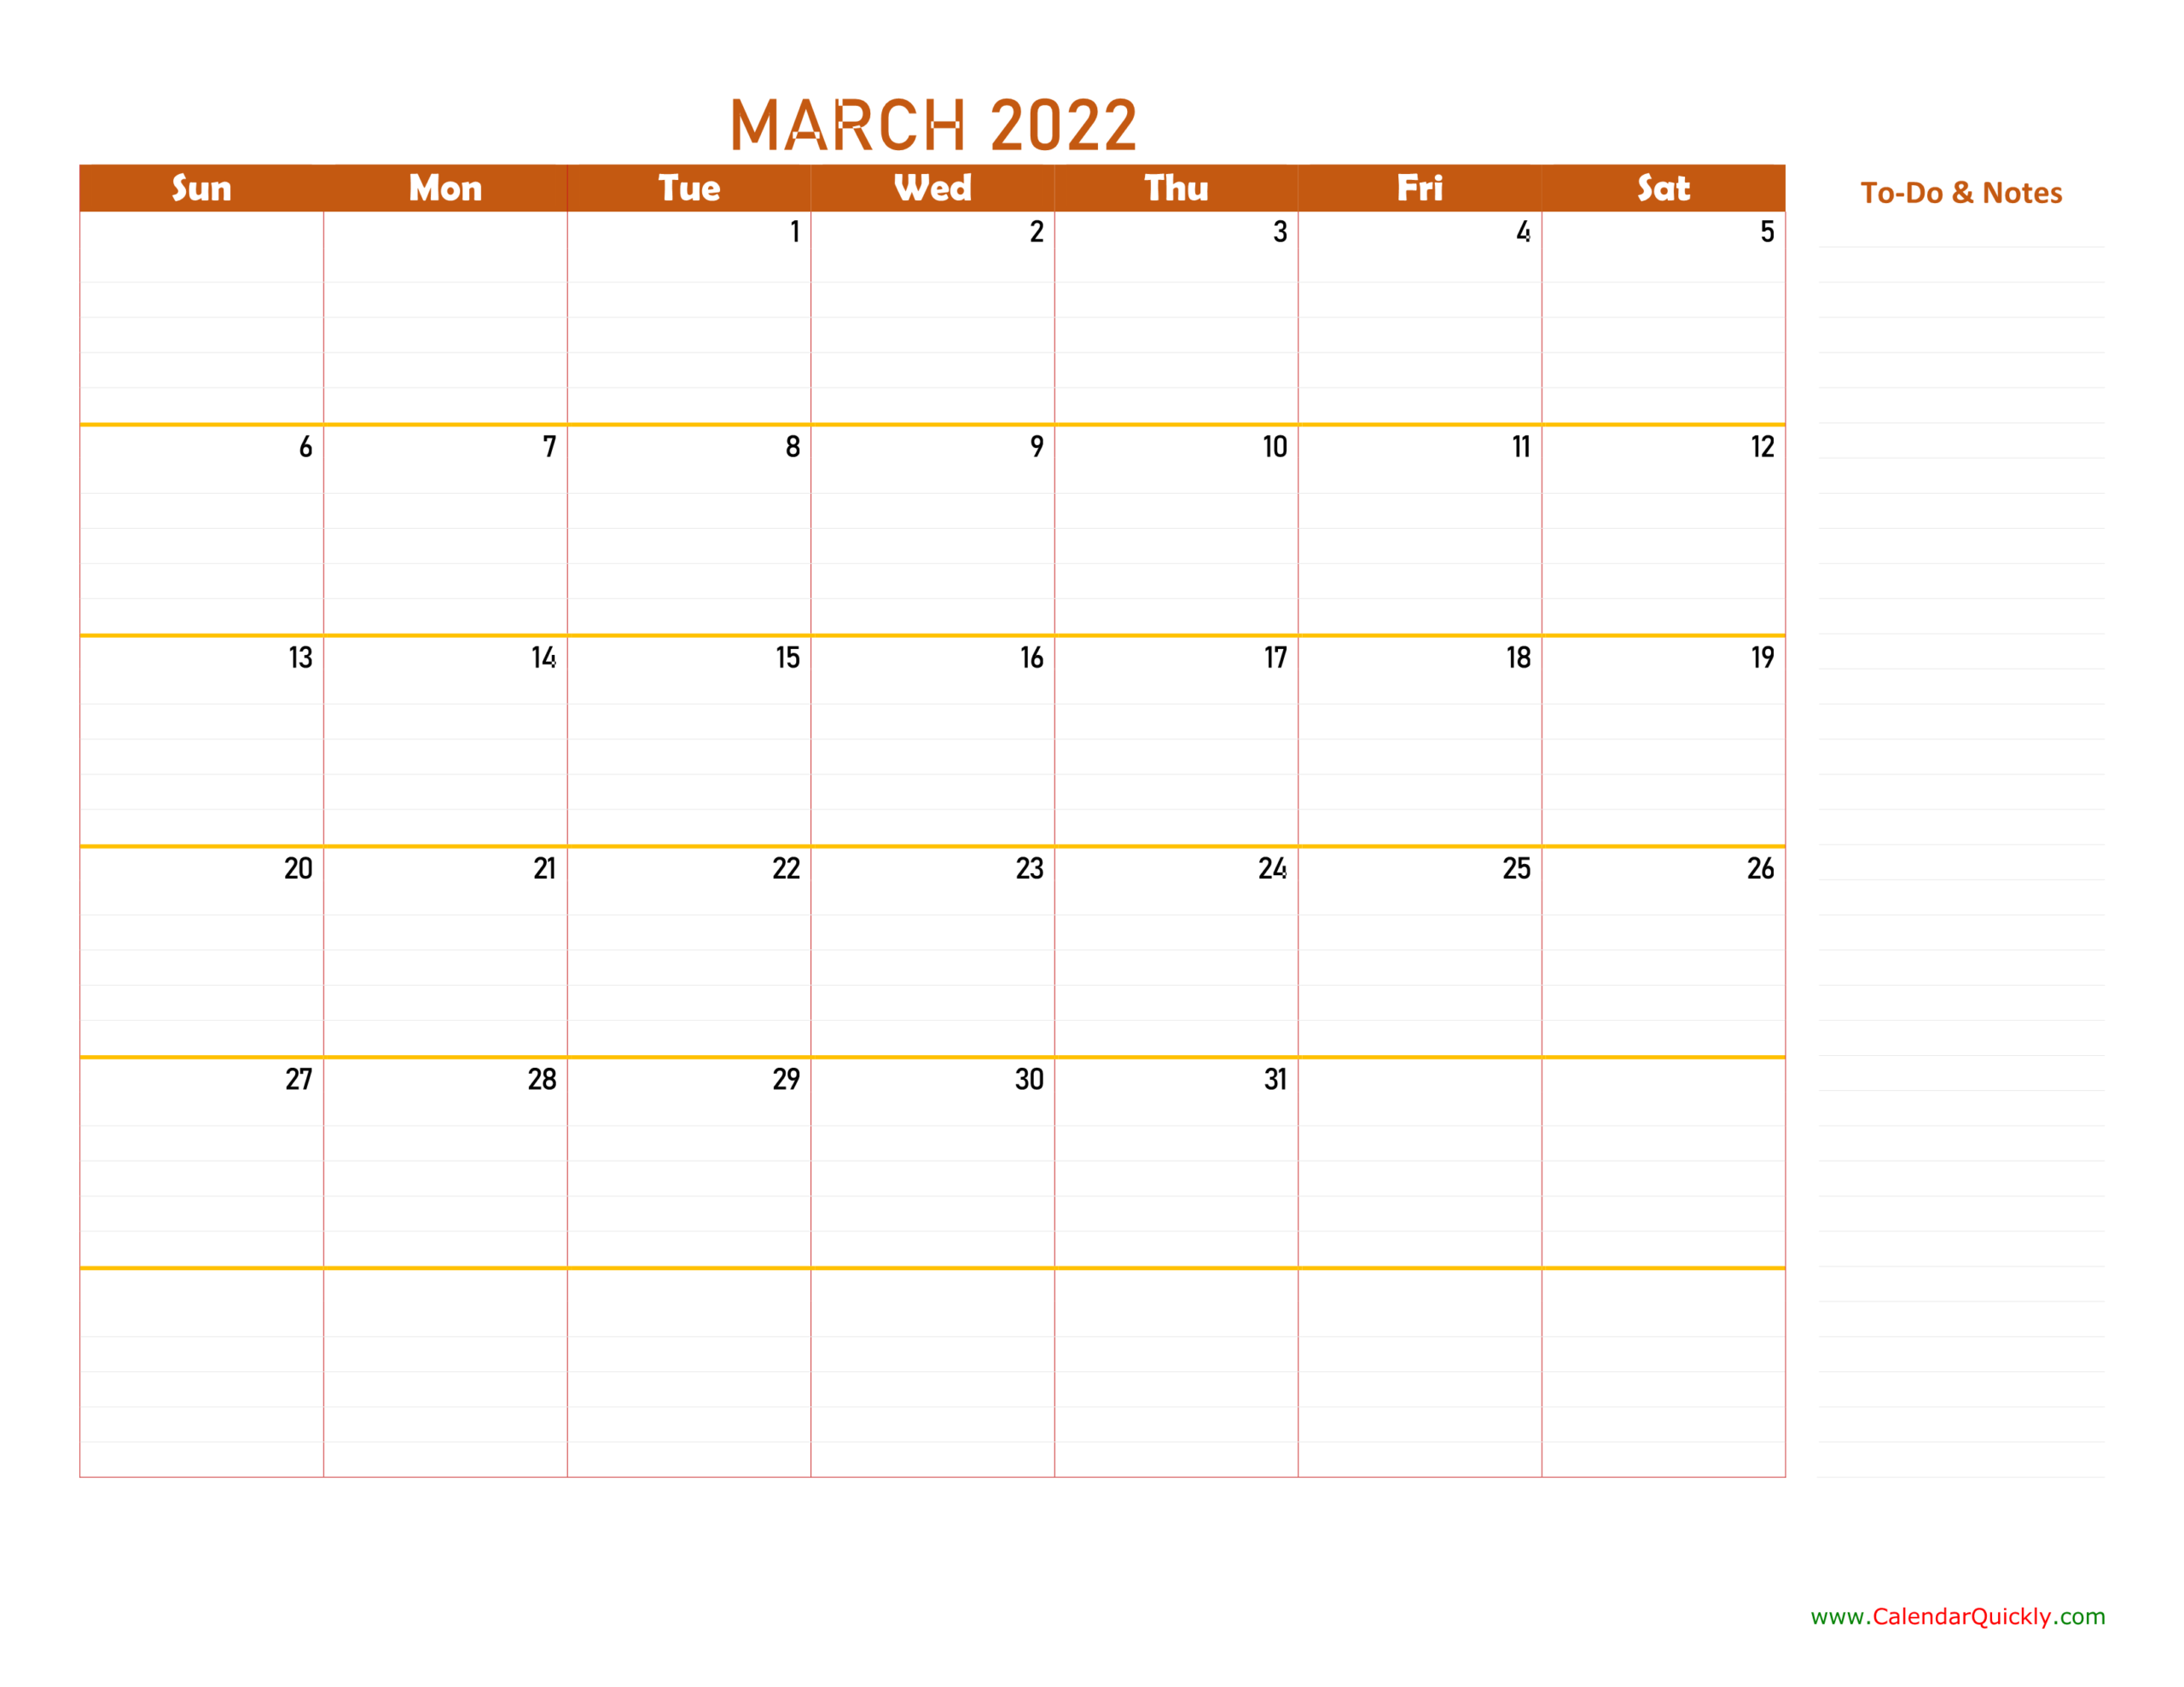 Catch October 11 2022 Calendar